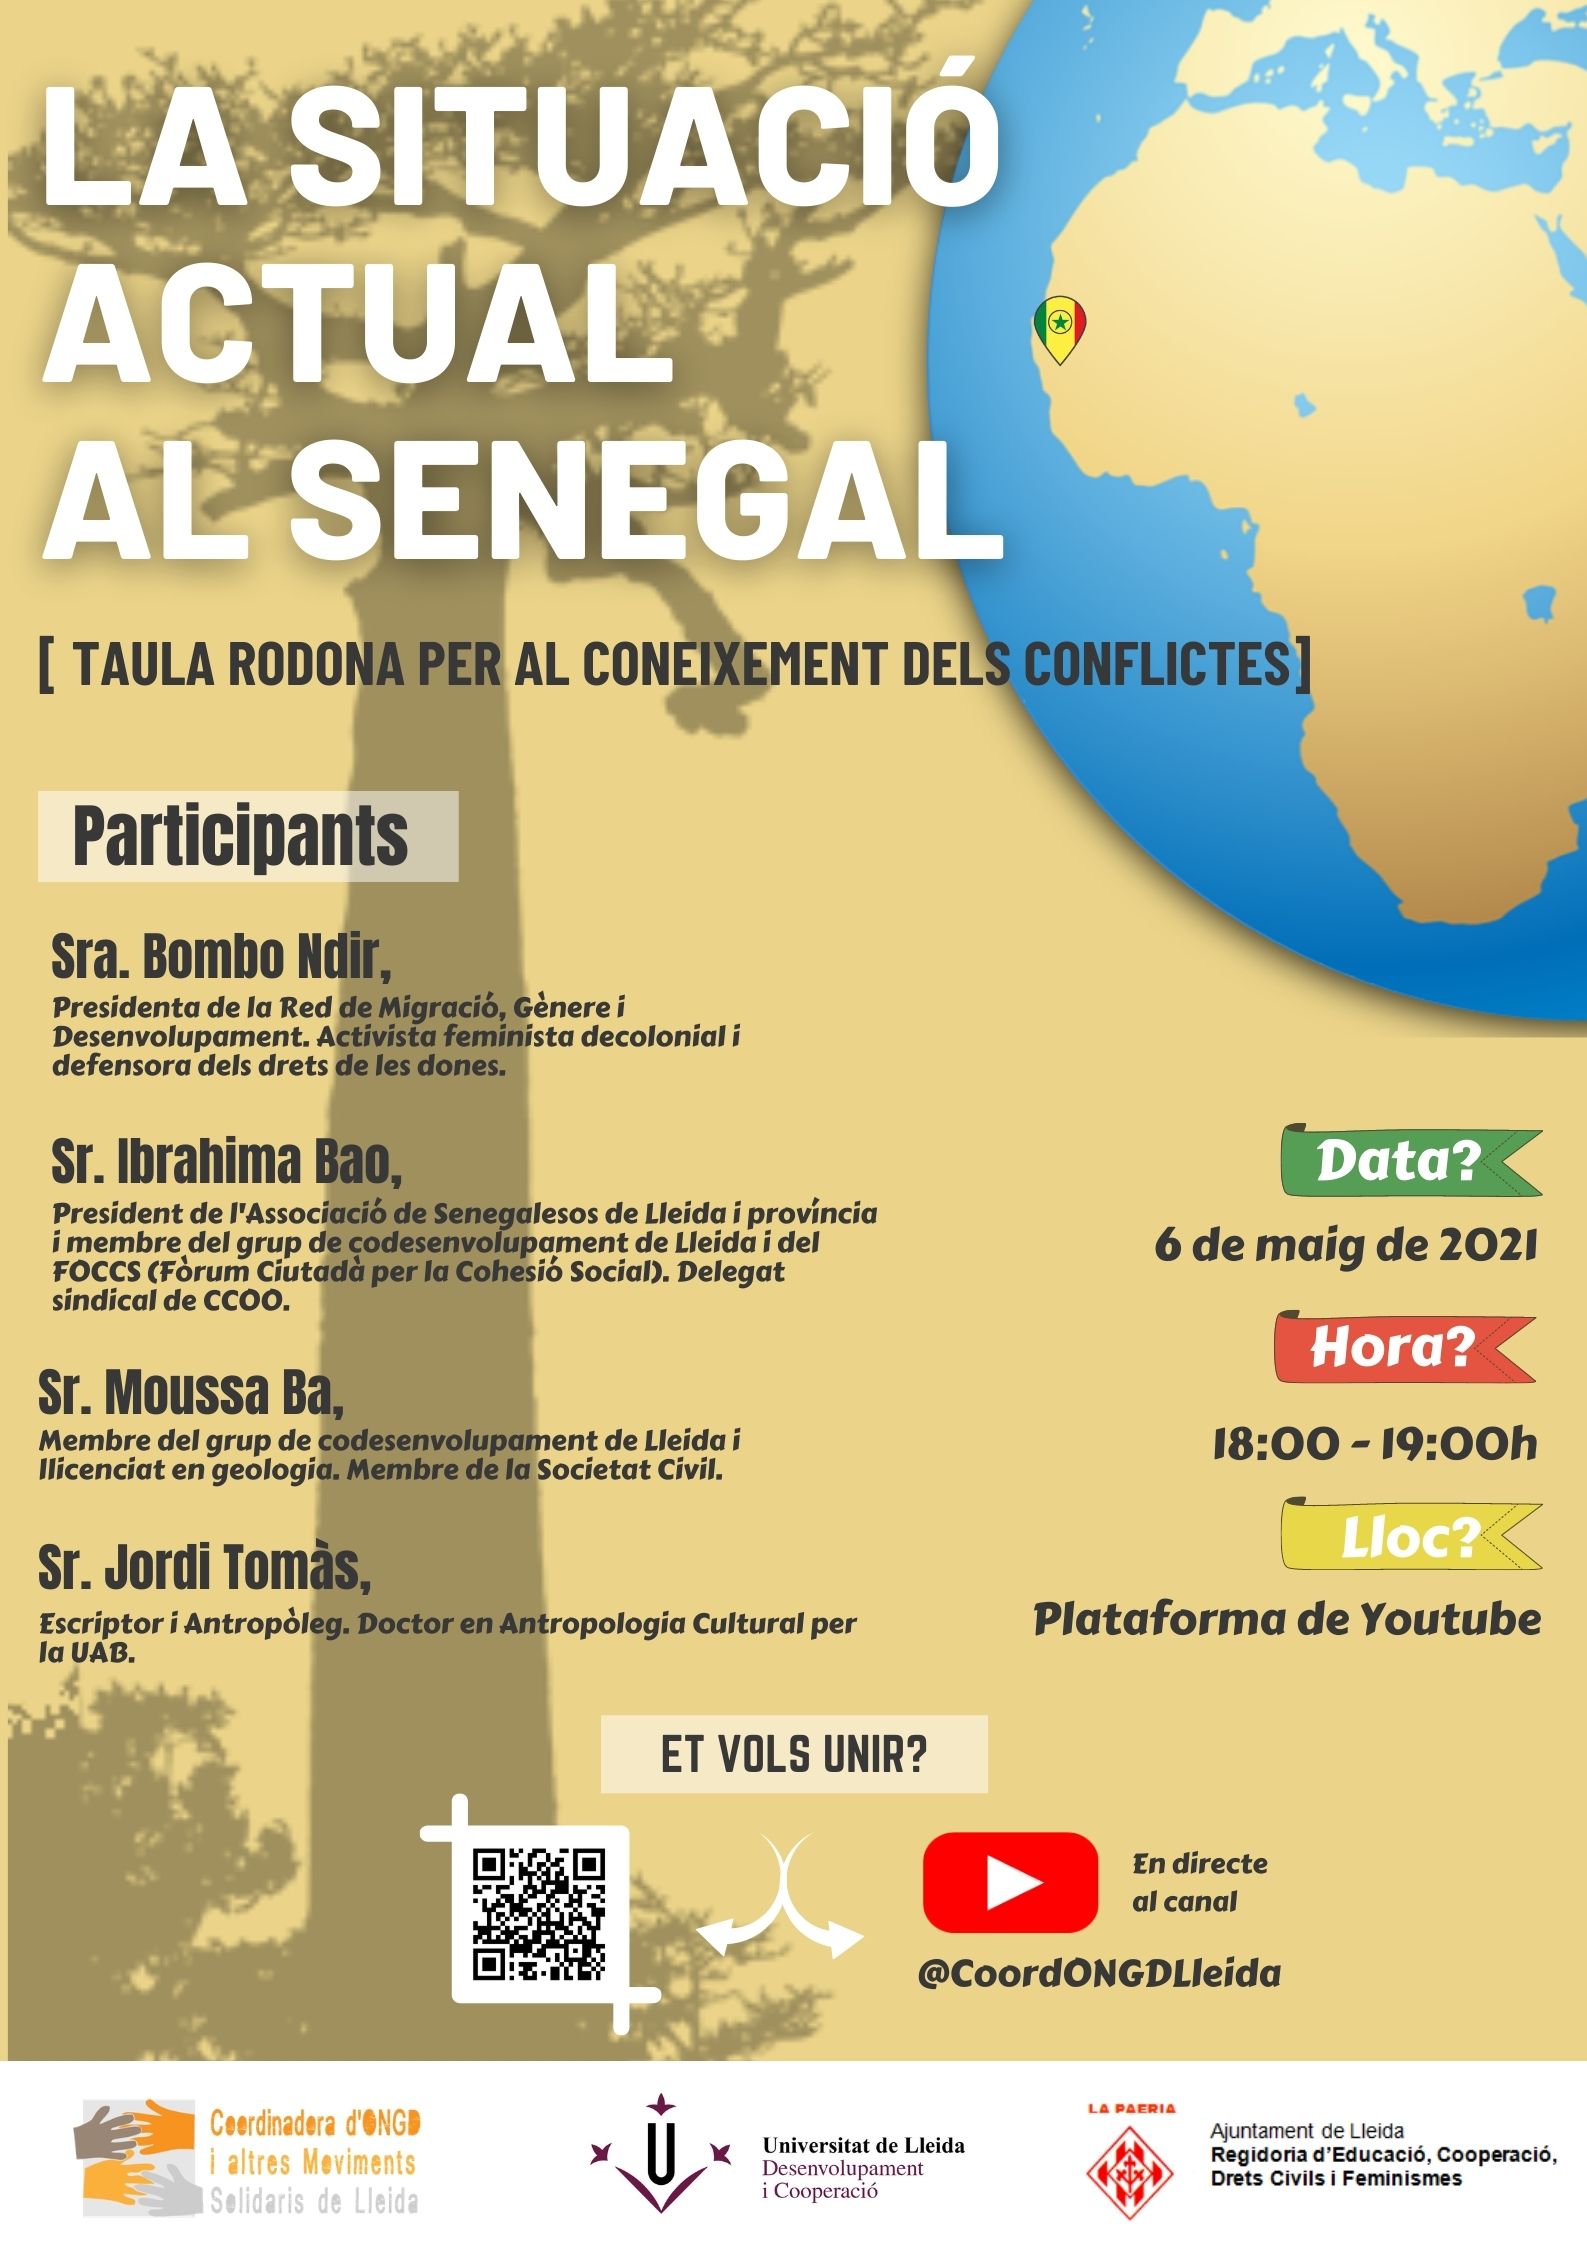 lA-SITUACIO-ACTUAL-AL-SENEGAL